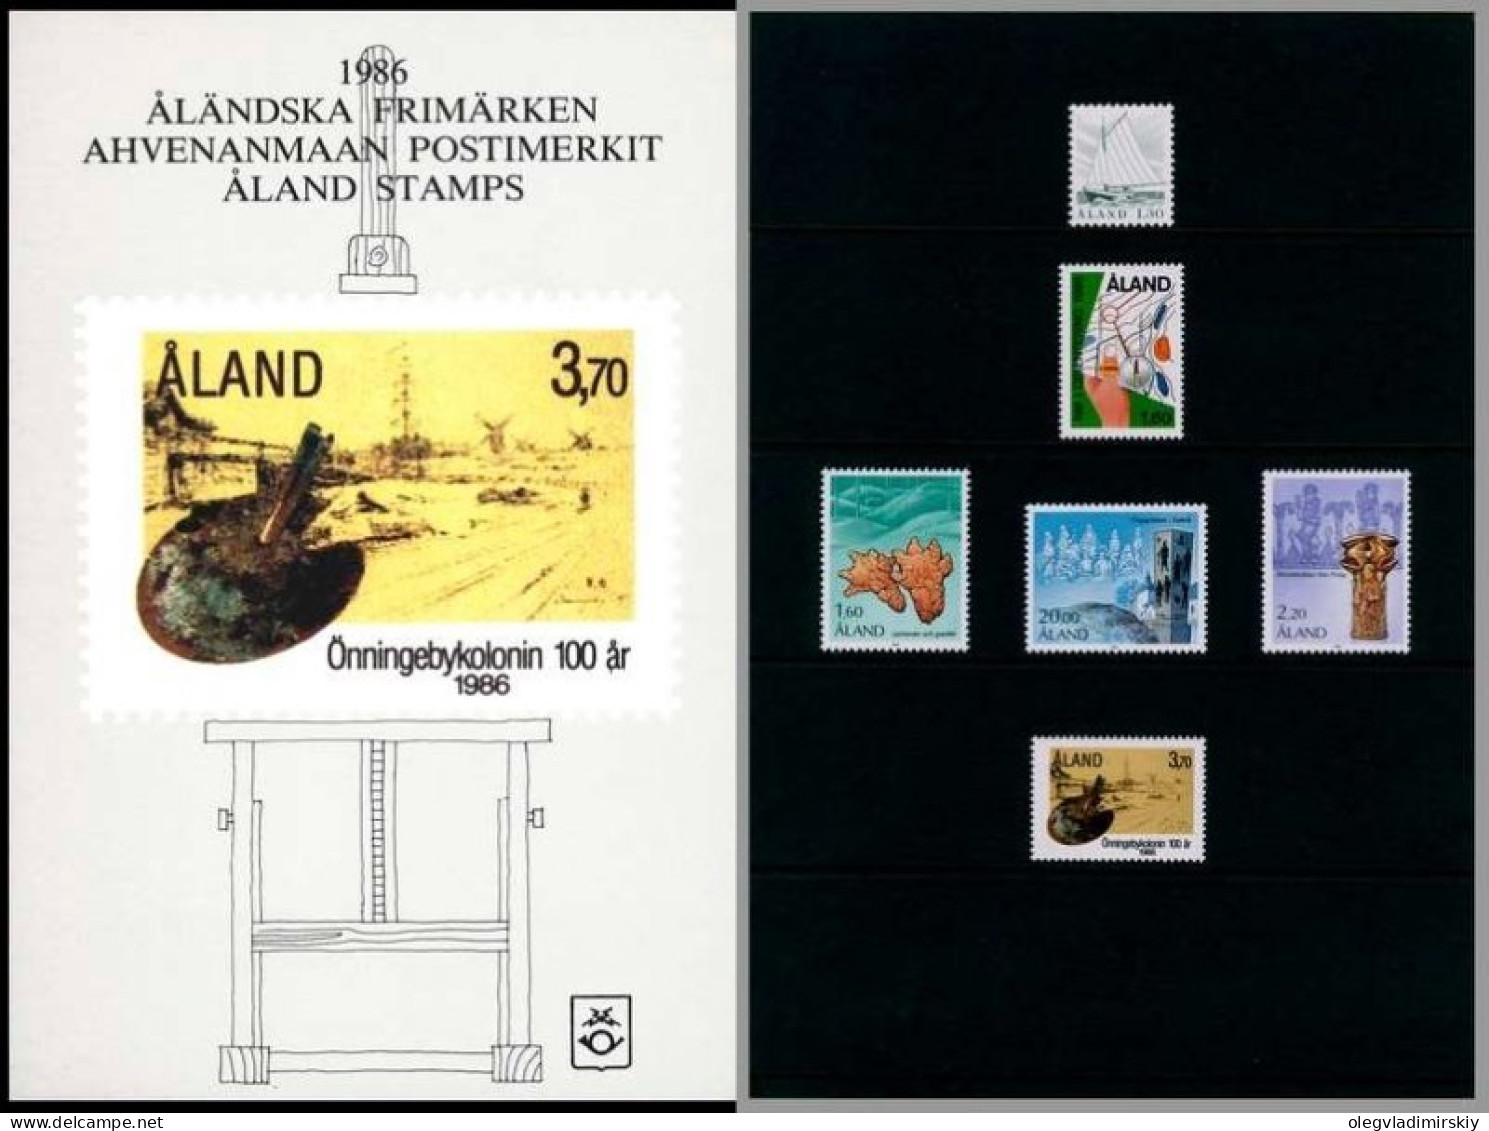 Aland Åland Finland 1986 Year Set Mint - Annate Complete